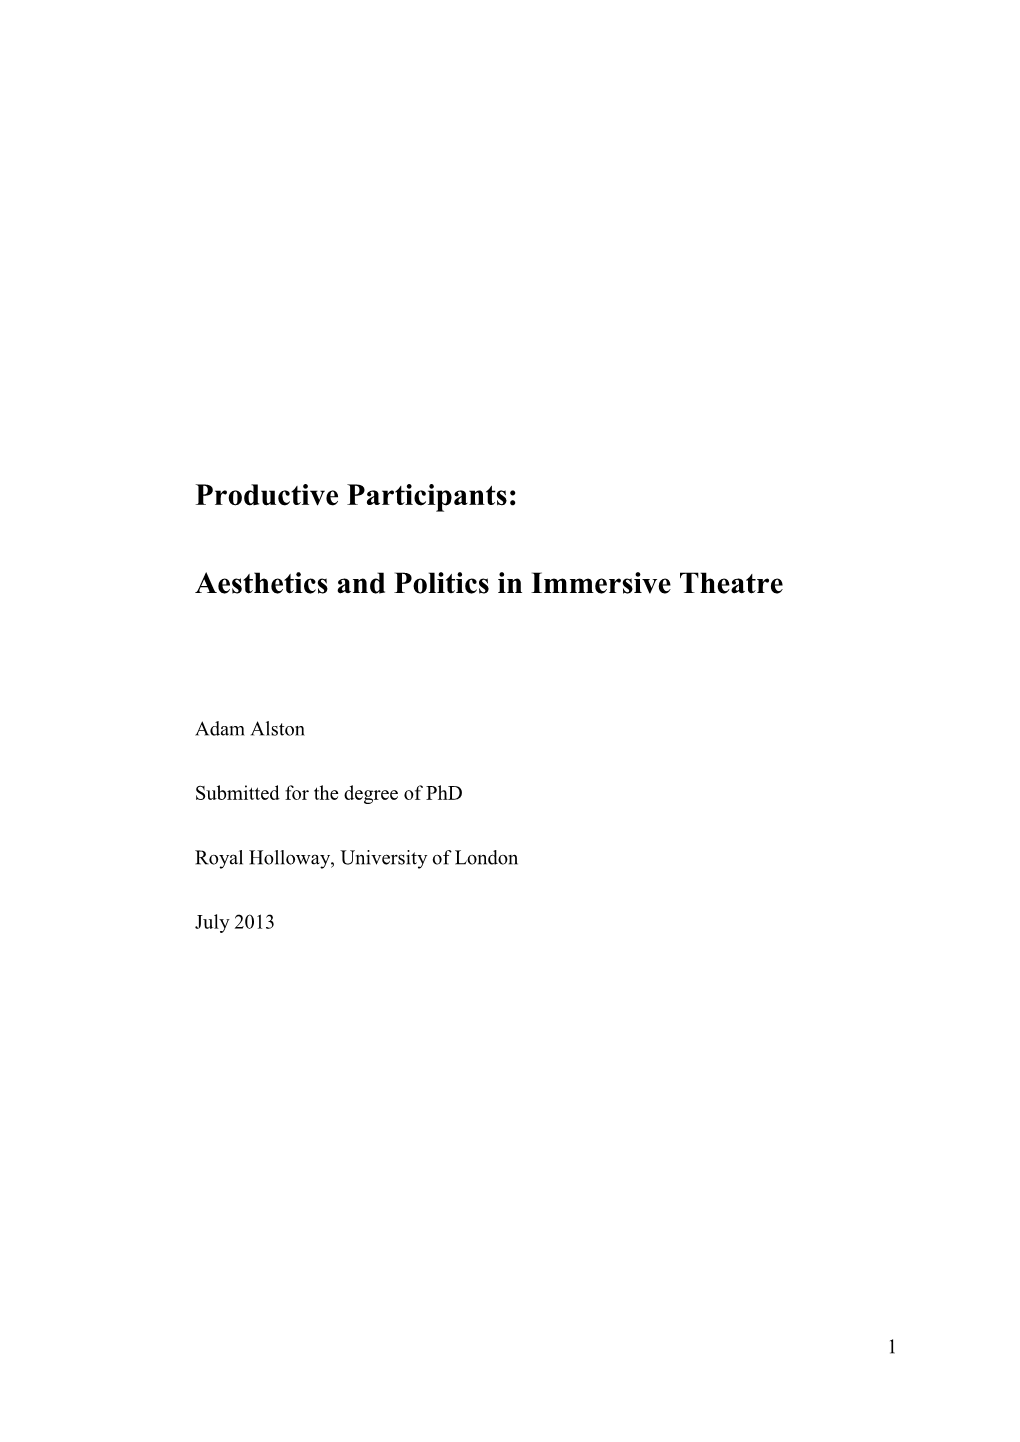 Productive Participants: Aesthetics and Politics in Immersive Theatre